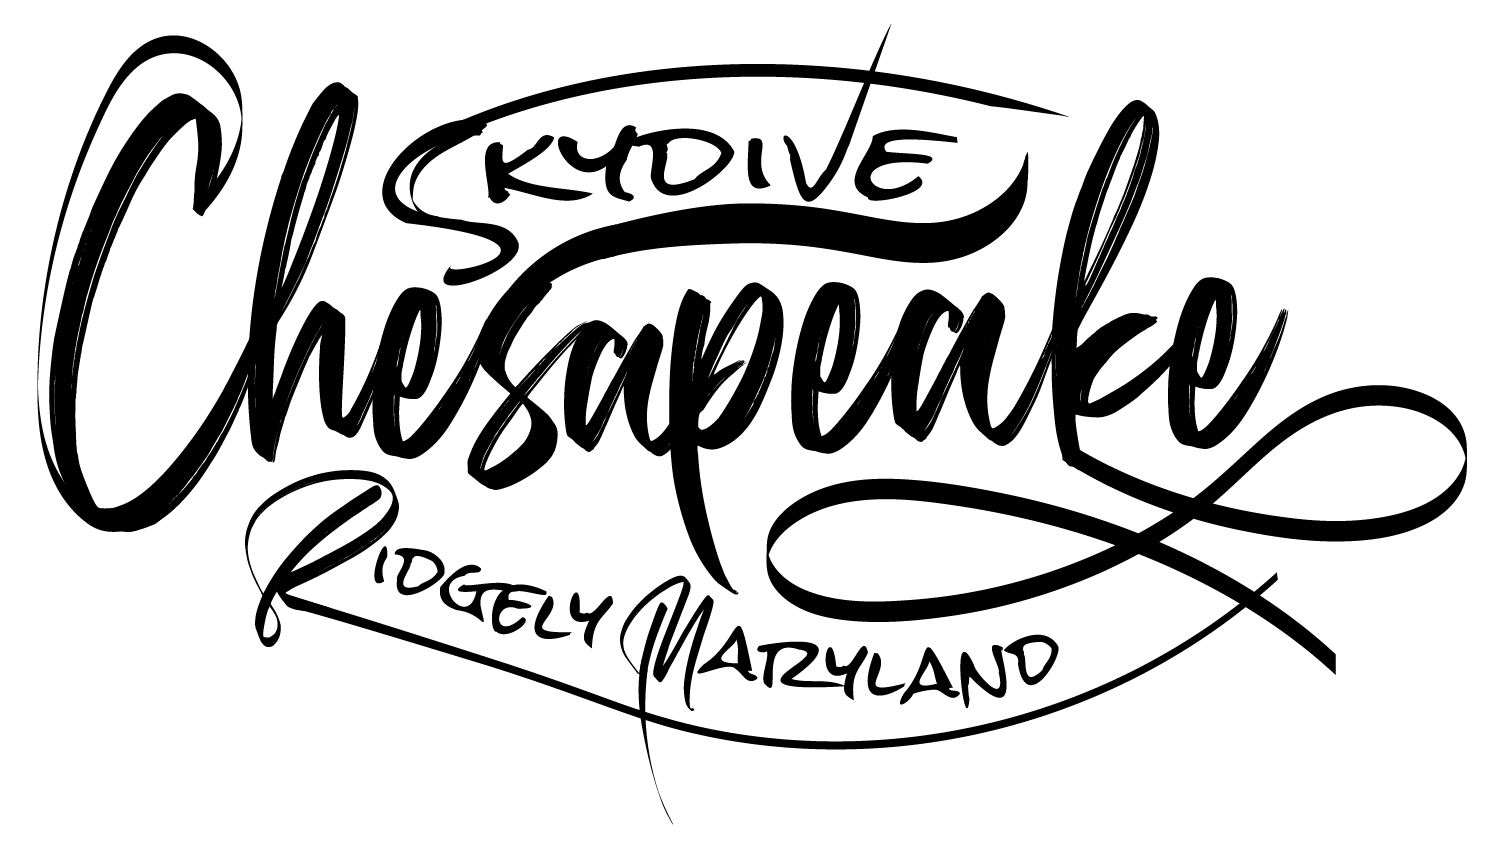 Skydive Chesapeake logo